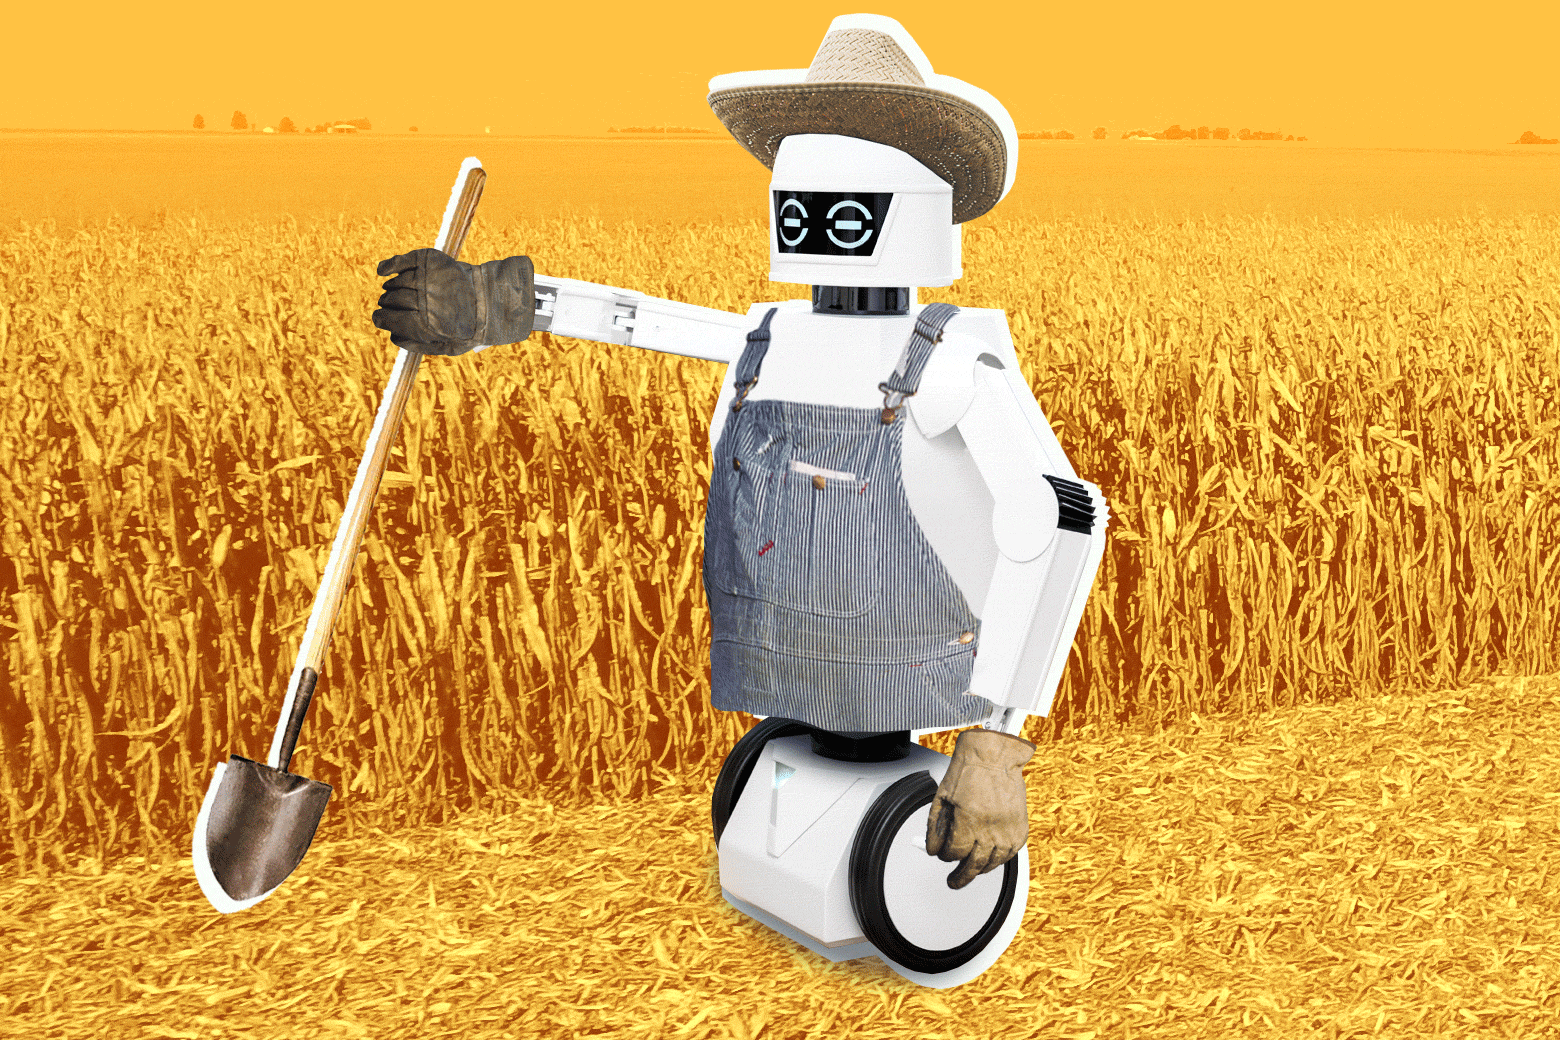 A robot farmer holding a shovel in a field of wheat.